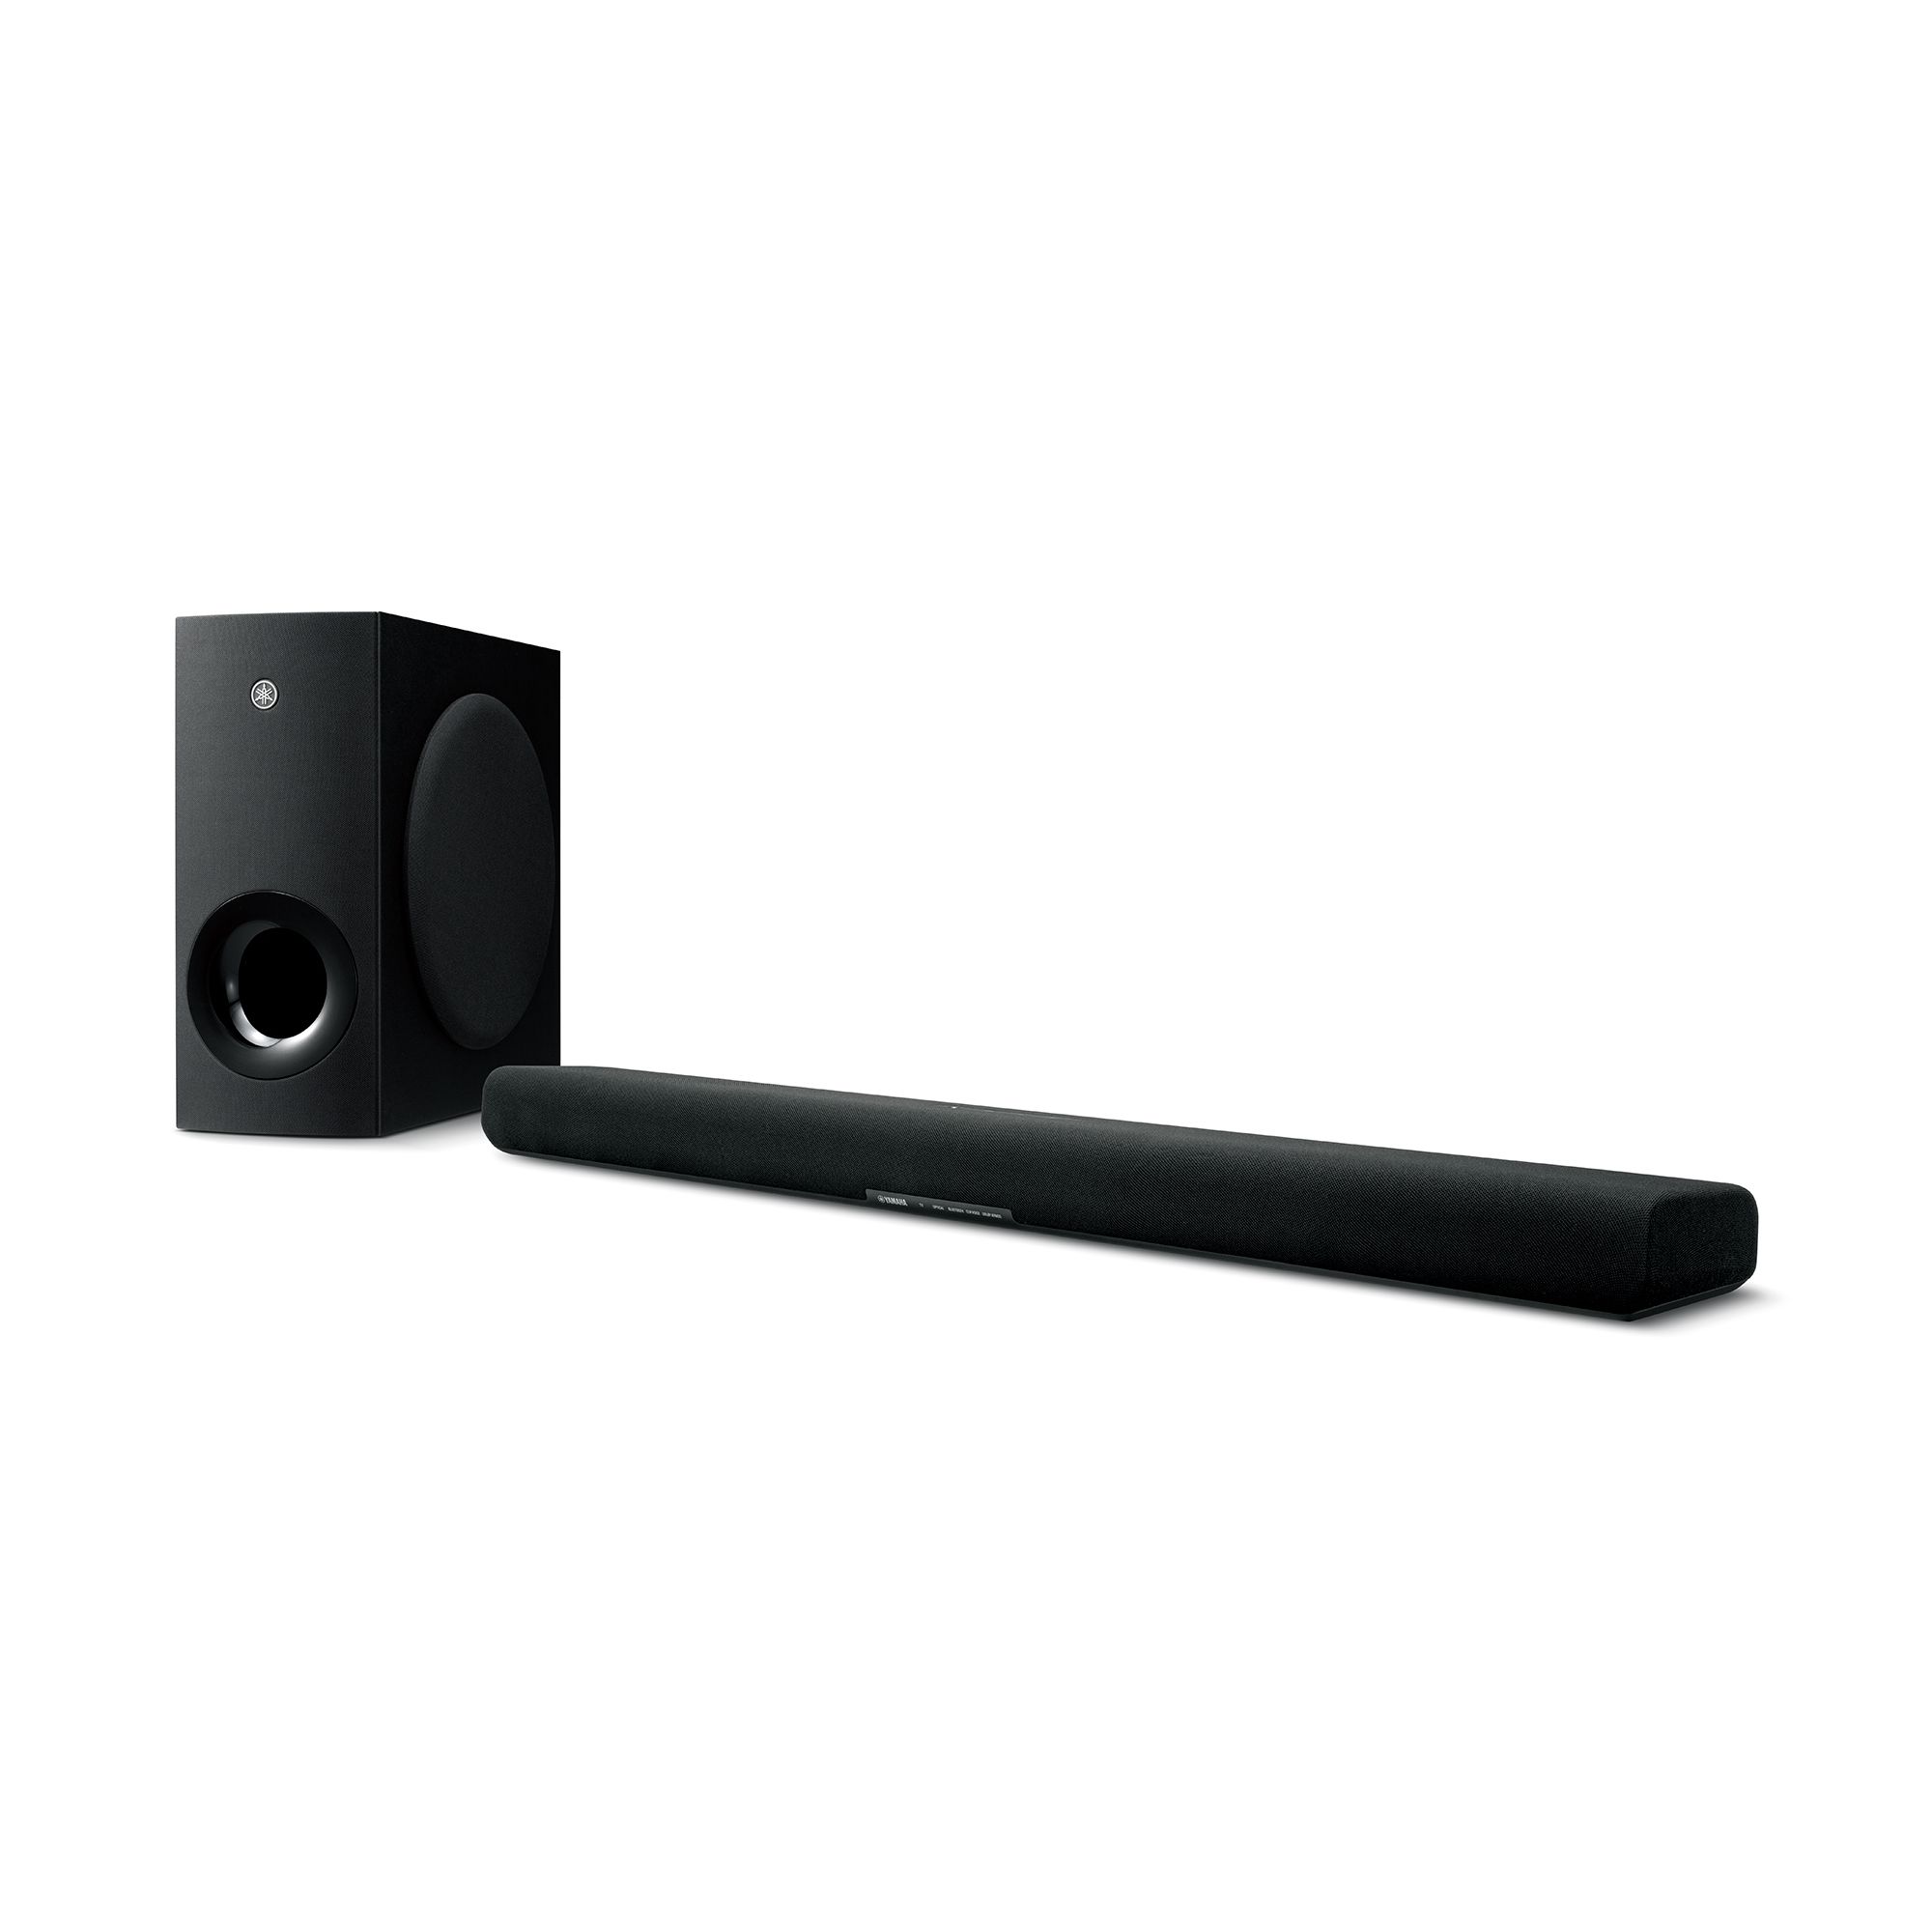 Sound Bar - Audio & Visual - Products - Yamaha - Canada - English